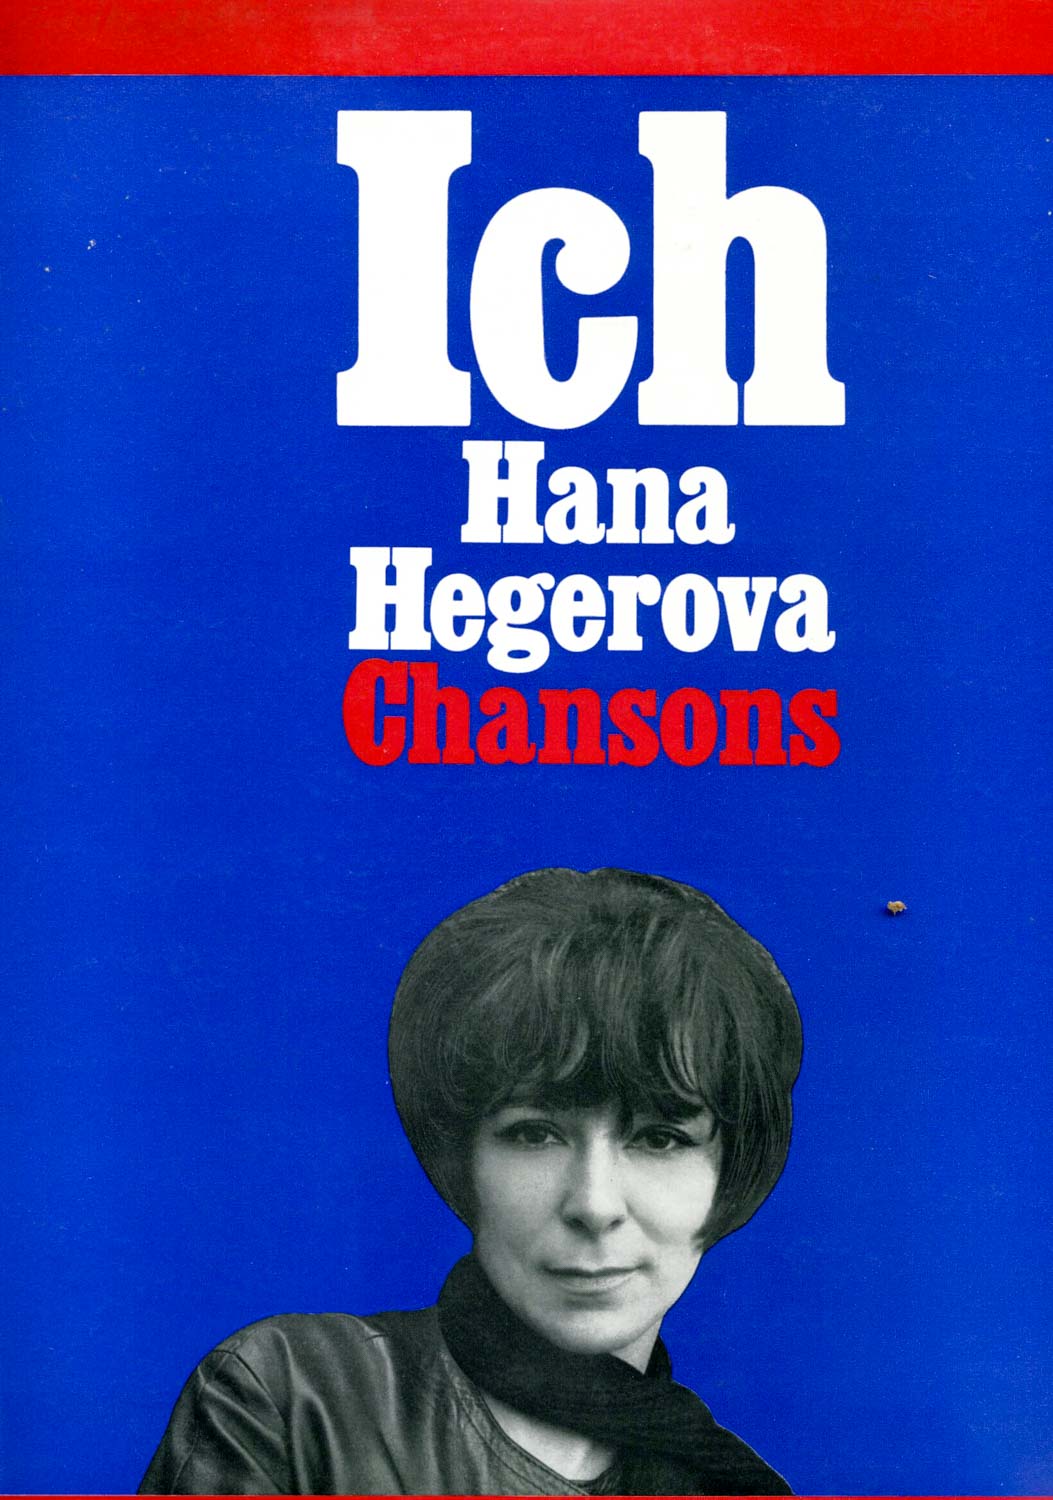 Hana Hegerova  Ich. Chansons (843 955 PY)  *LP 12'' (Vinyl)*. 